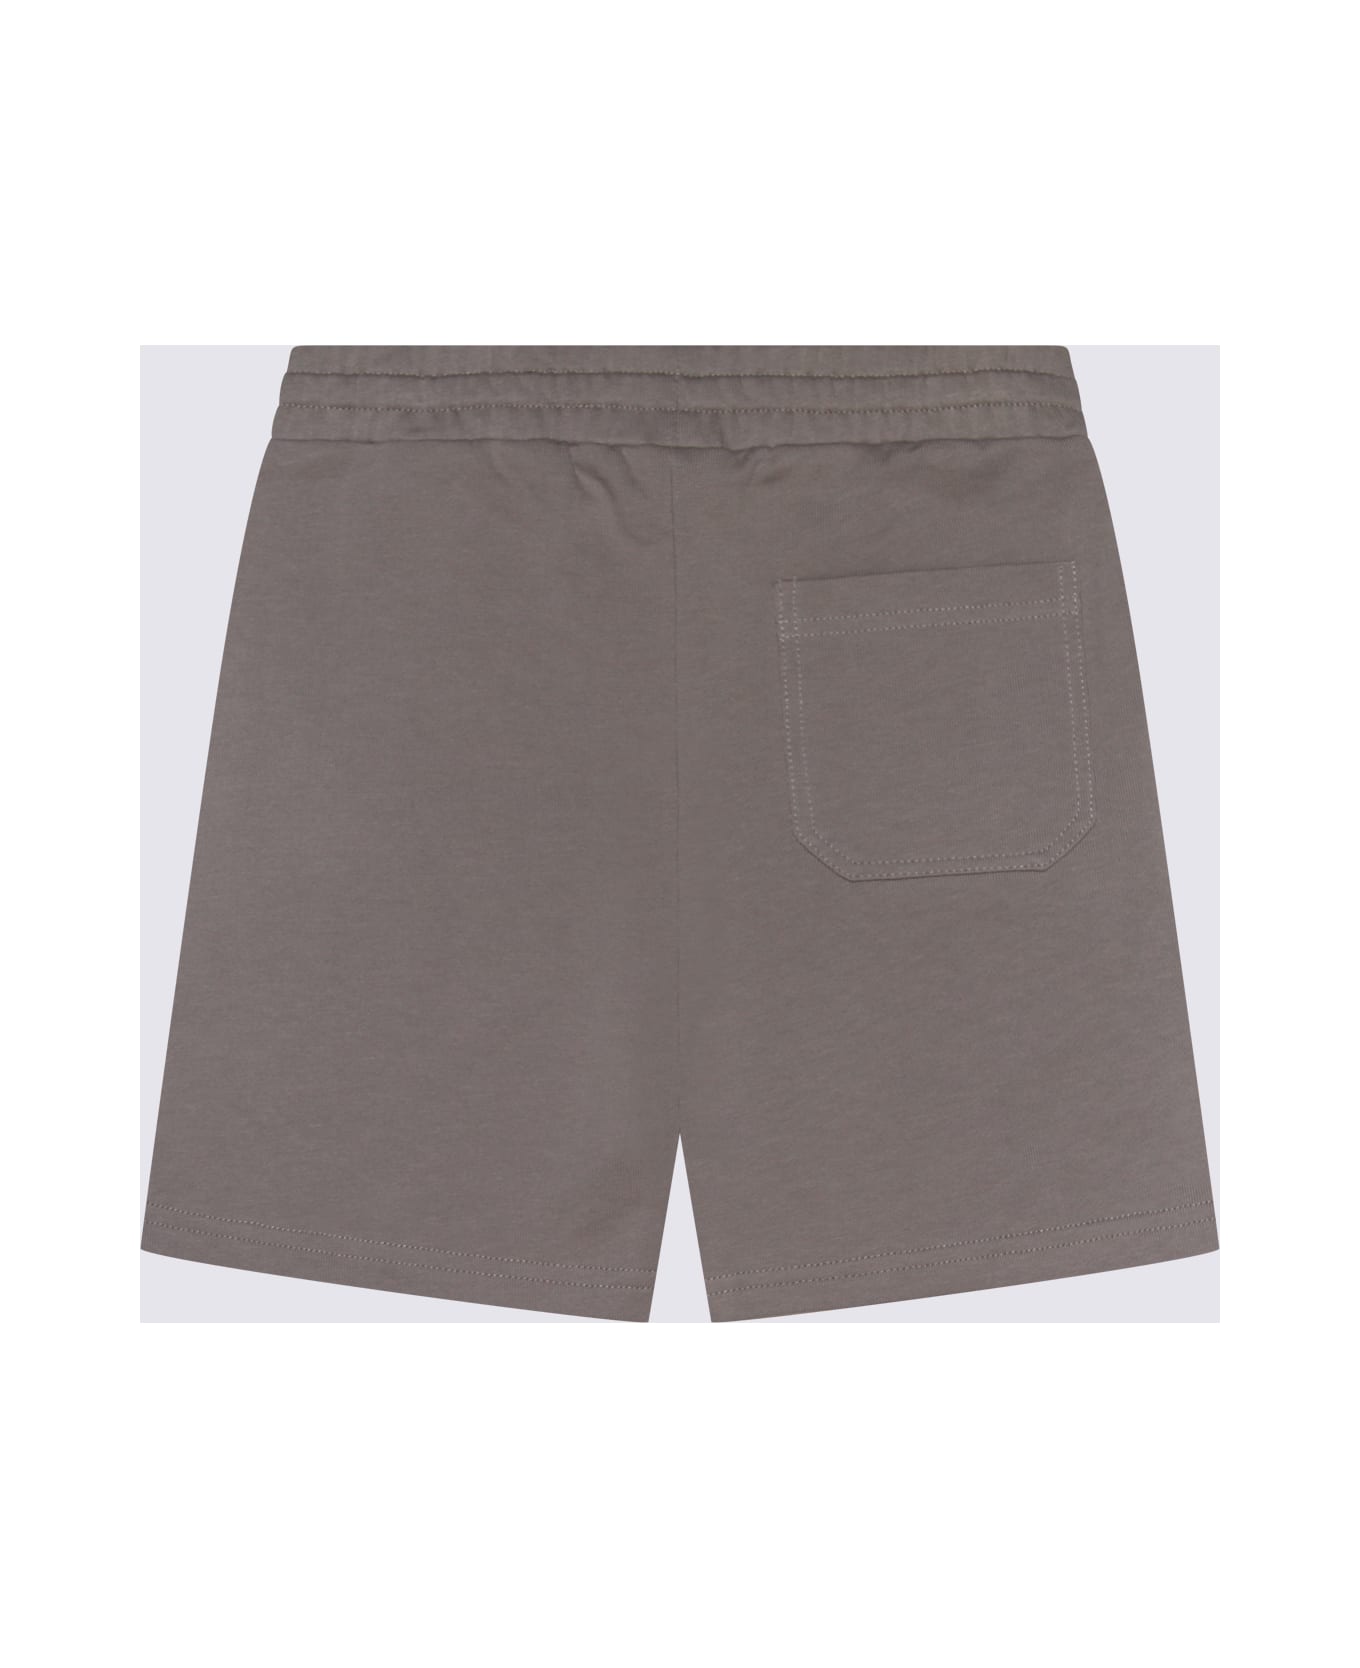 Stella McCartney Grey Cotton Shorts - Grey